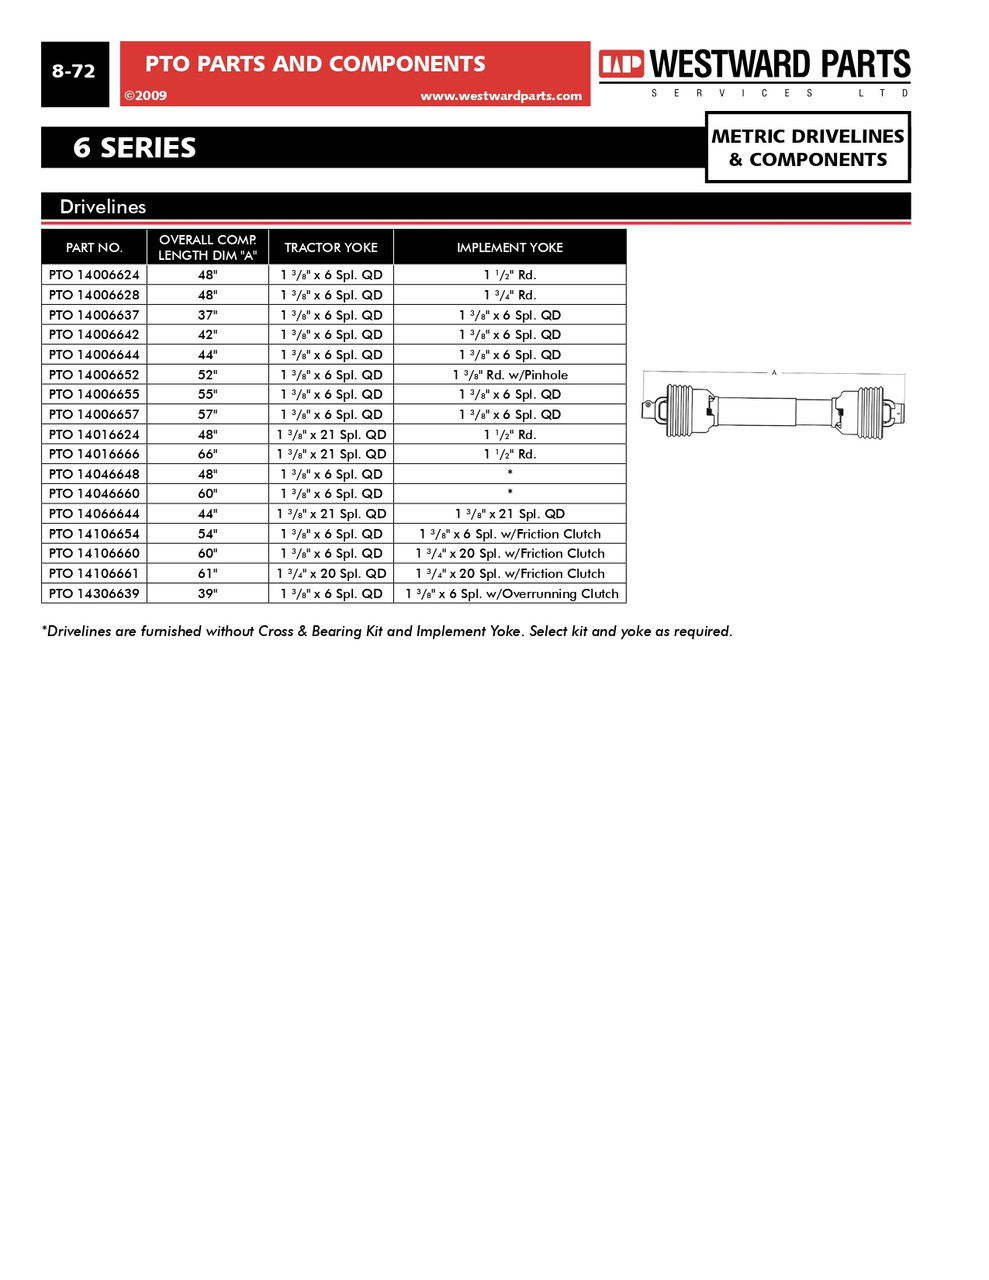 1-3/8"-21 Spline - Push Pin QD Yoke - Bondioli® 6 / Walterscheid® AW22 Series  PTO102-8621